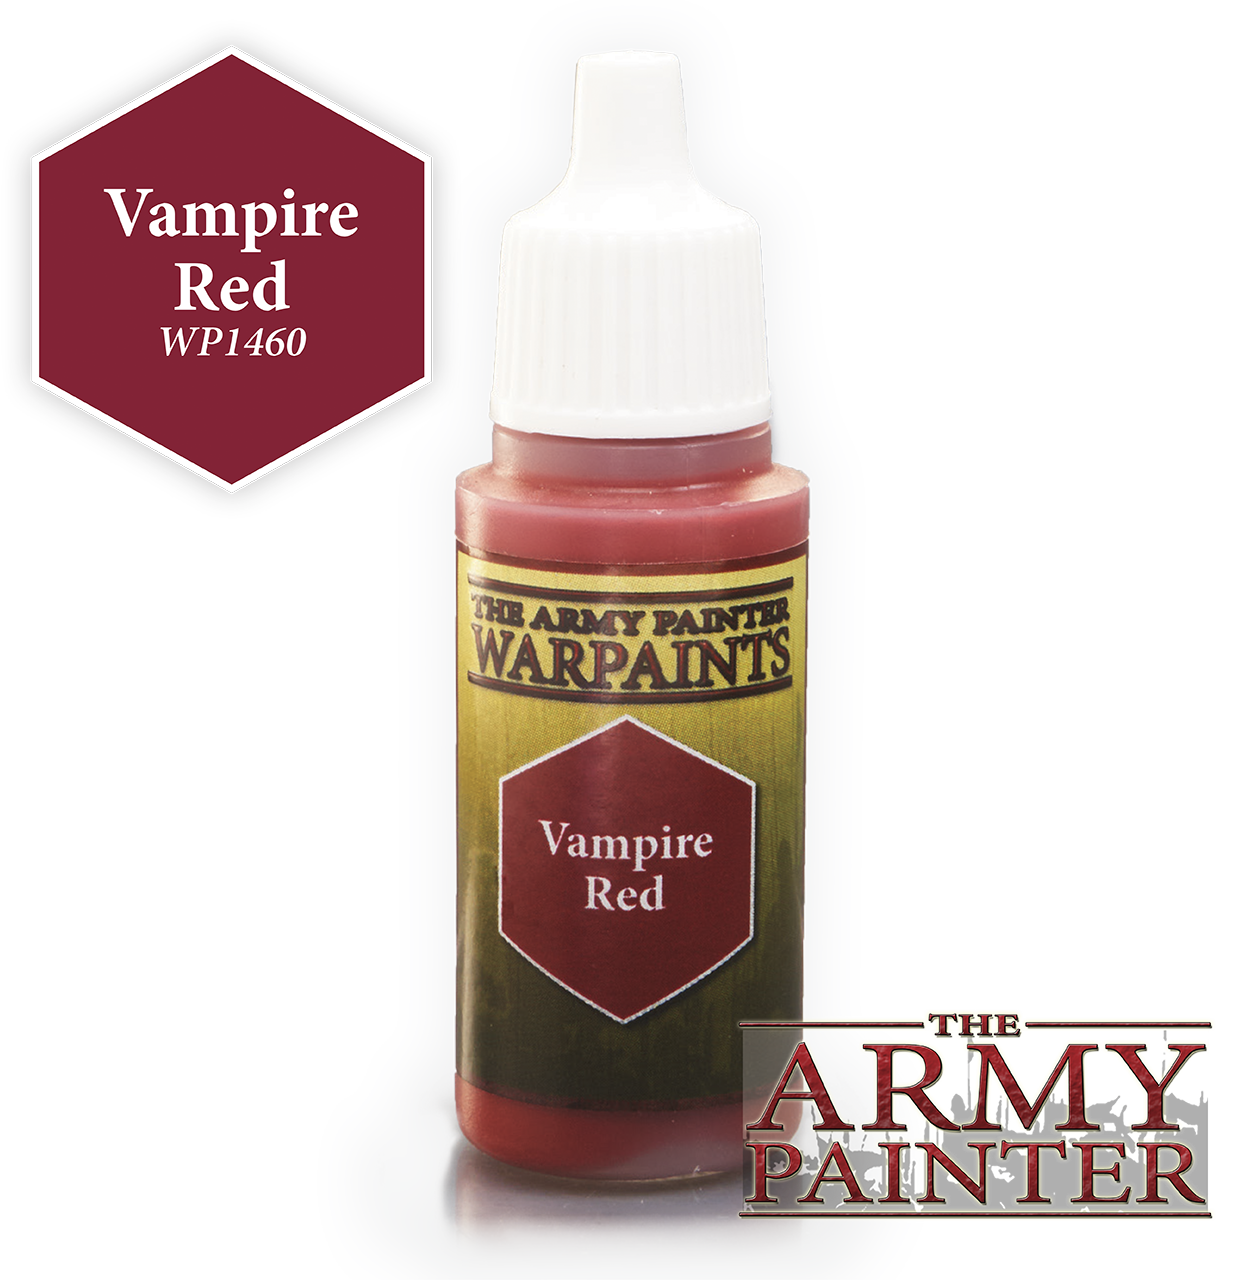 Vampire Red - Army Painter Warpaints